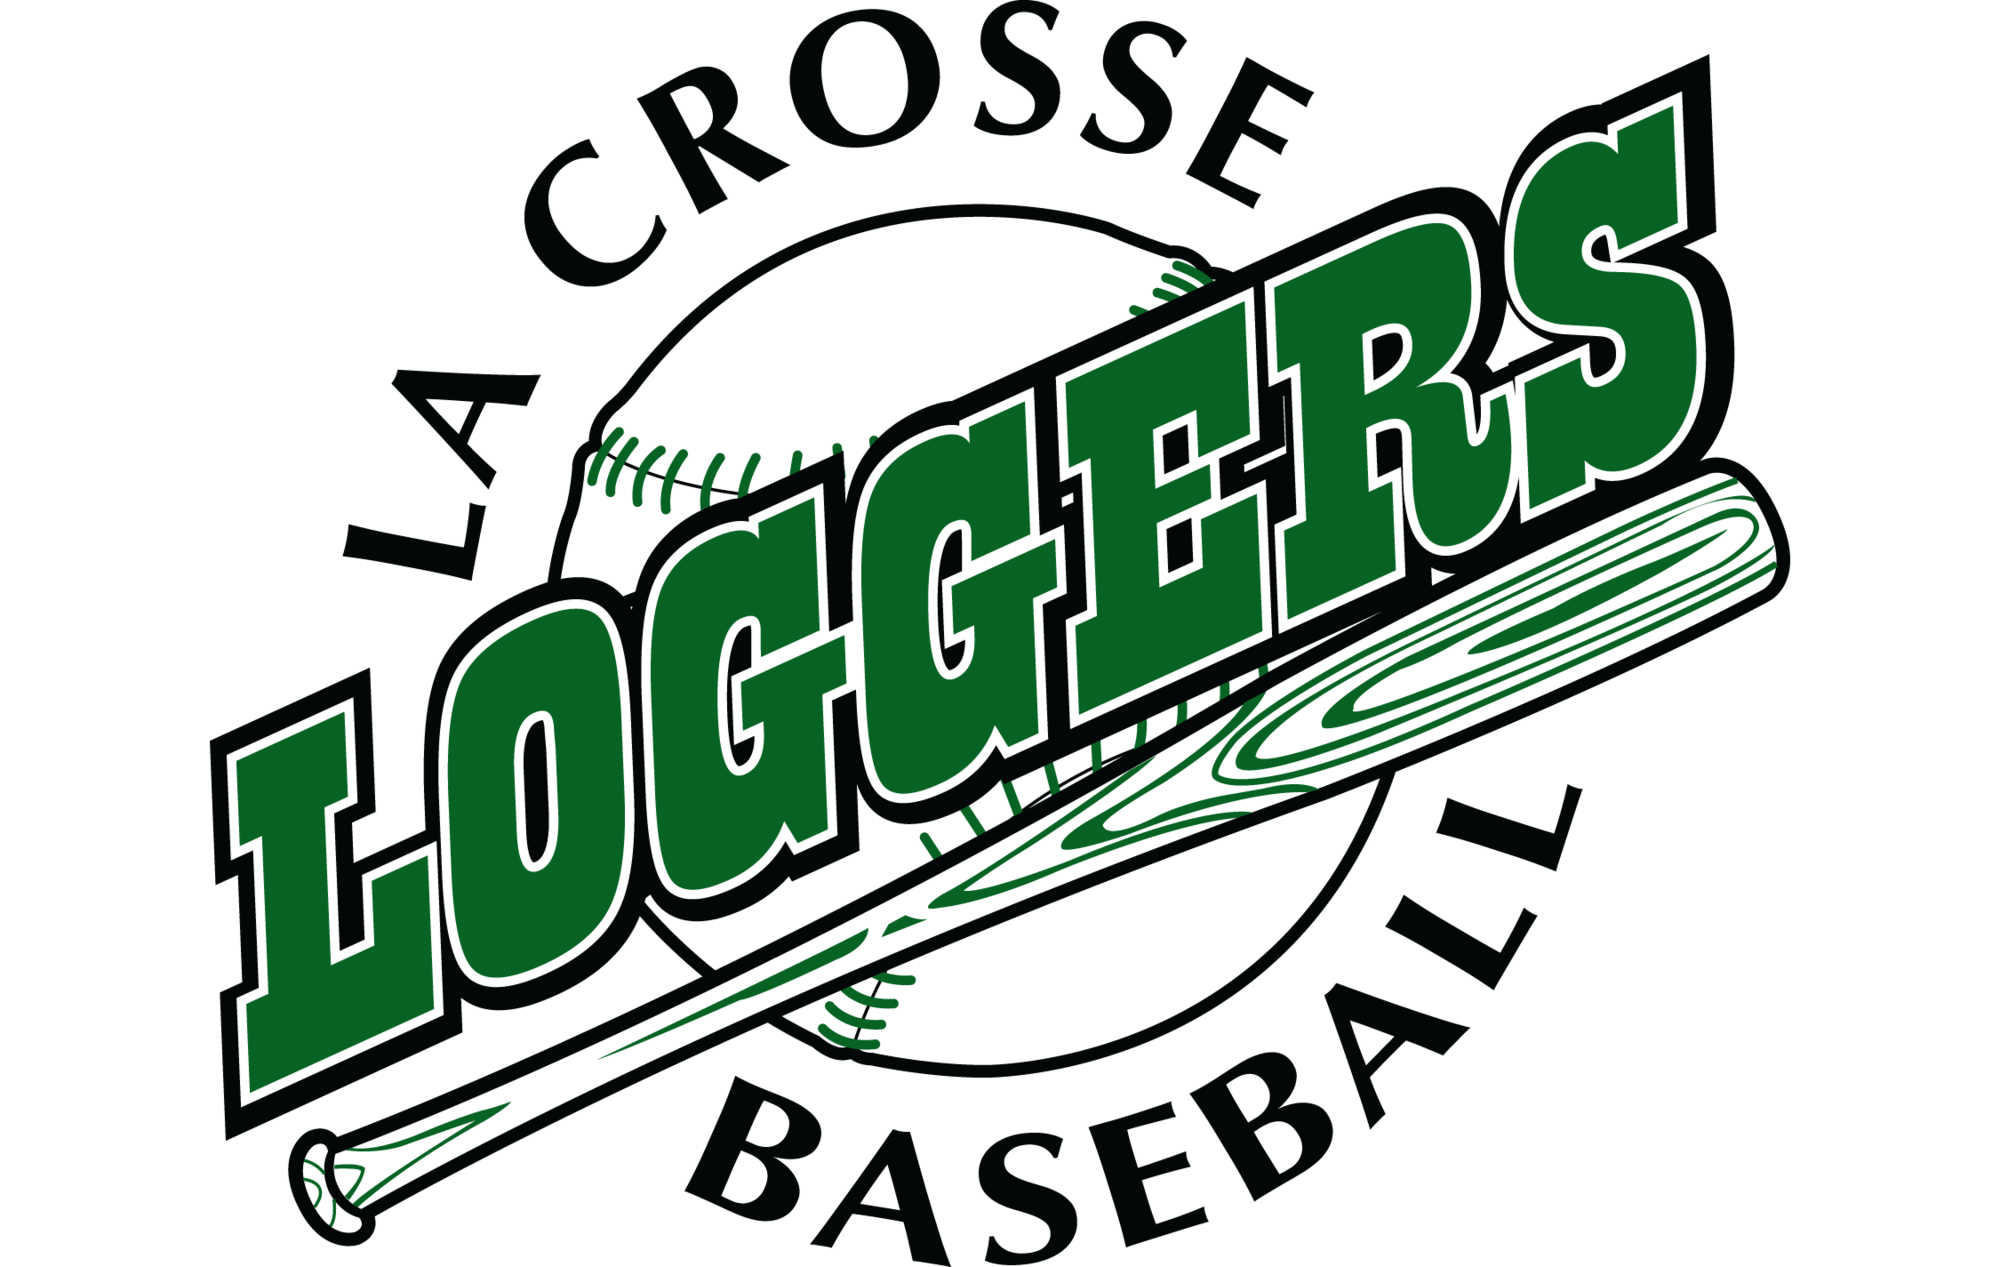 Loggers Logo - The La Crosse Loggers